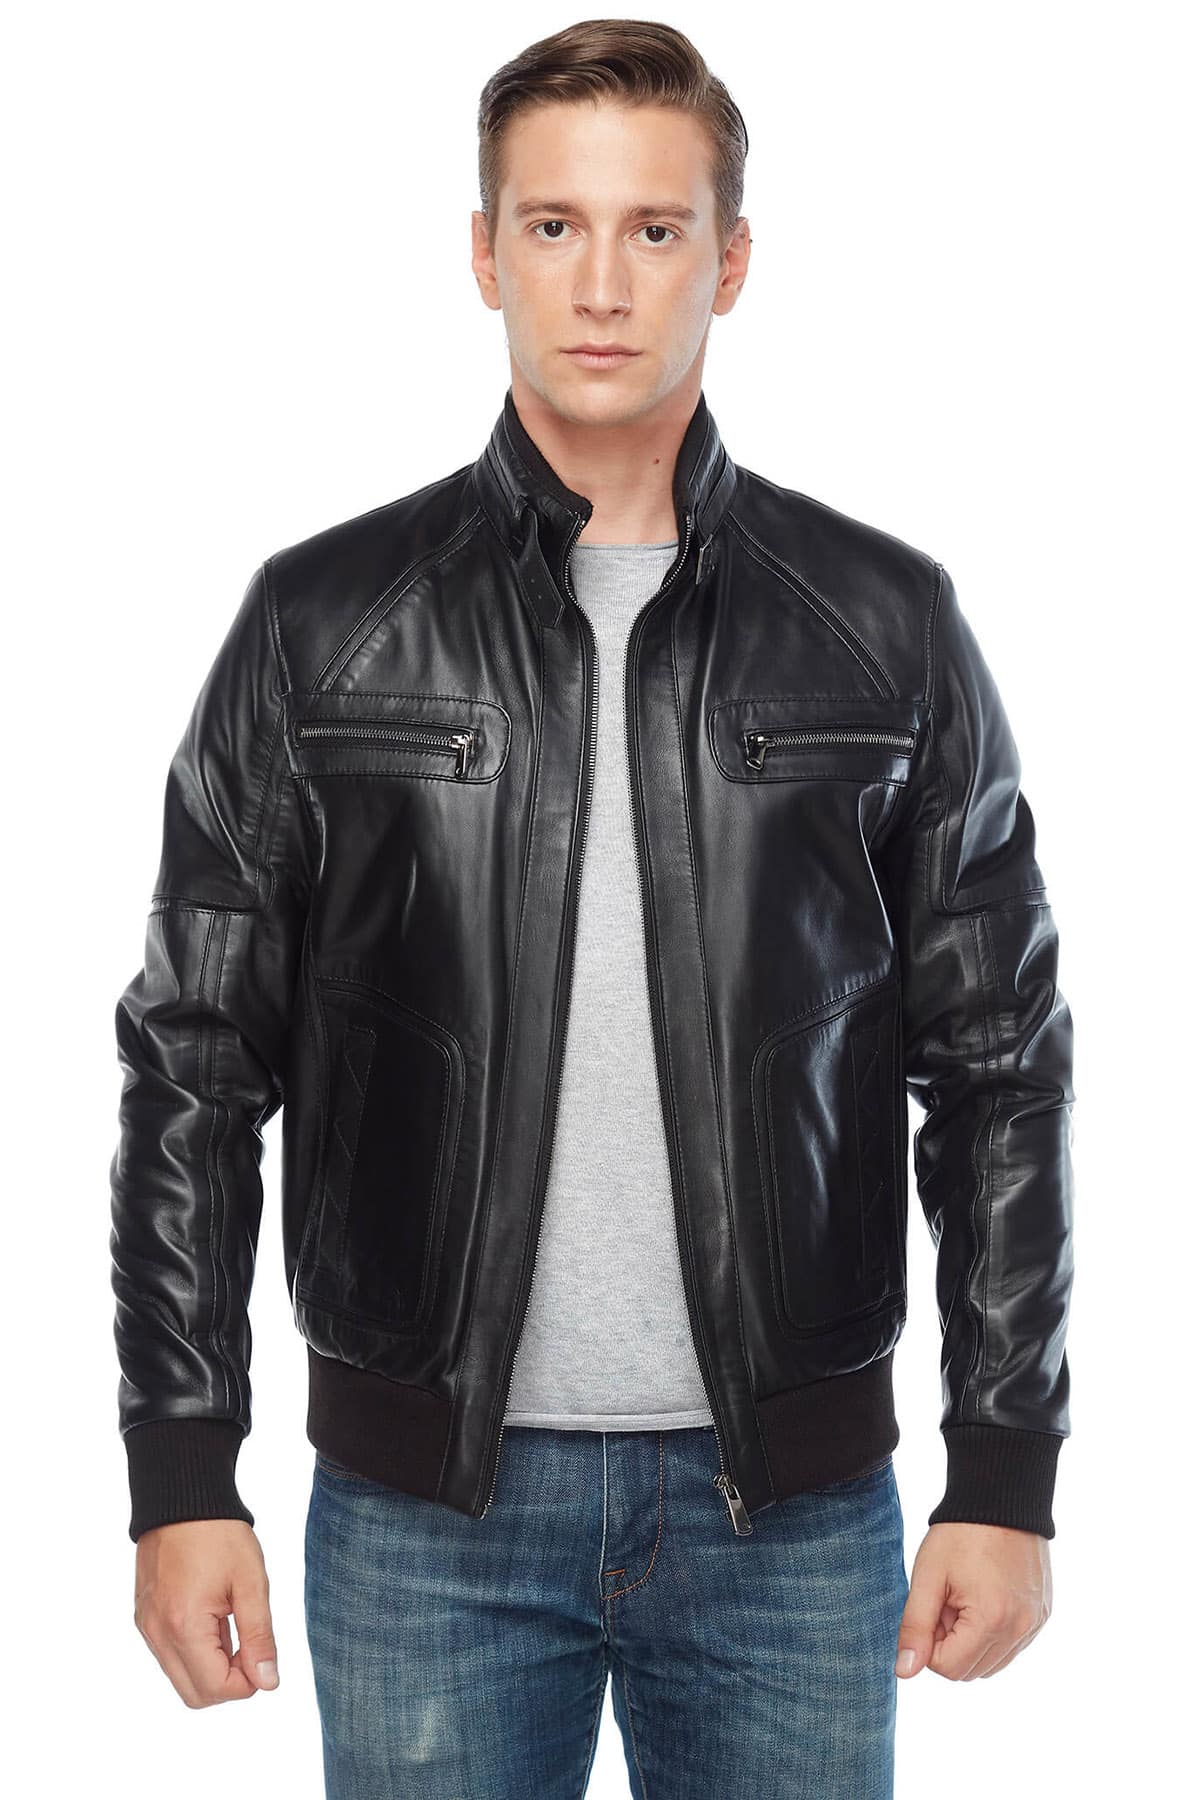 George Craig Men's 100 % Real Black Leather Bomber Jacket